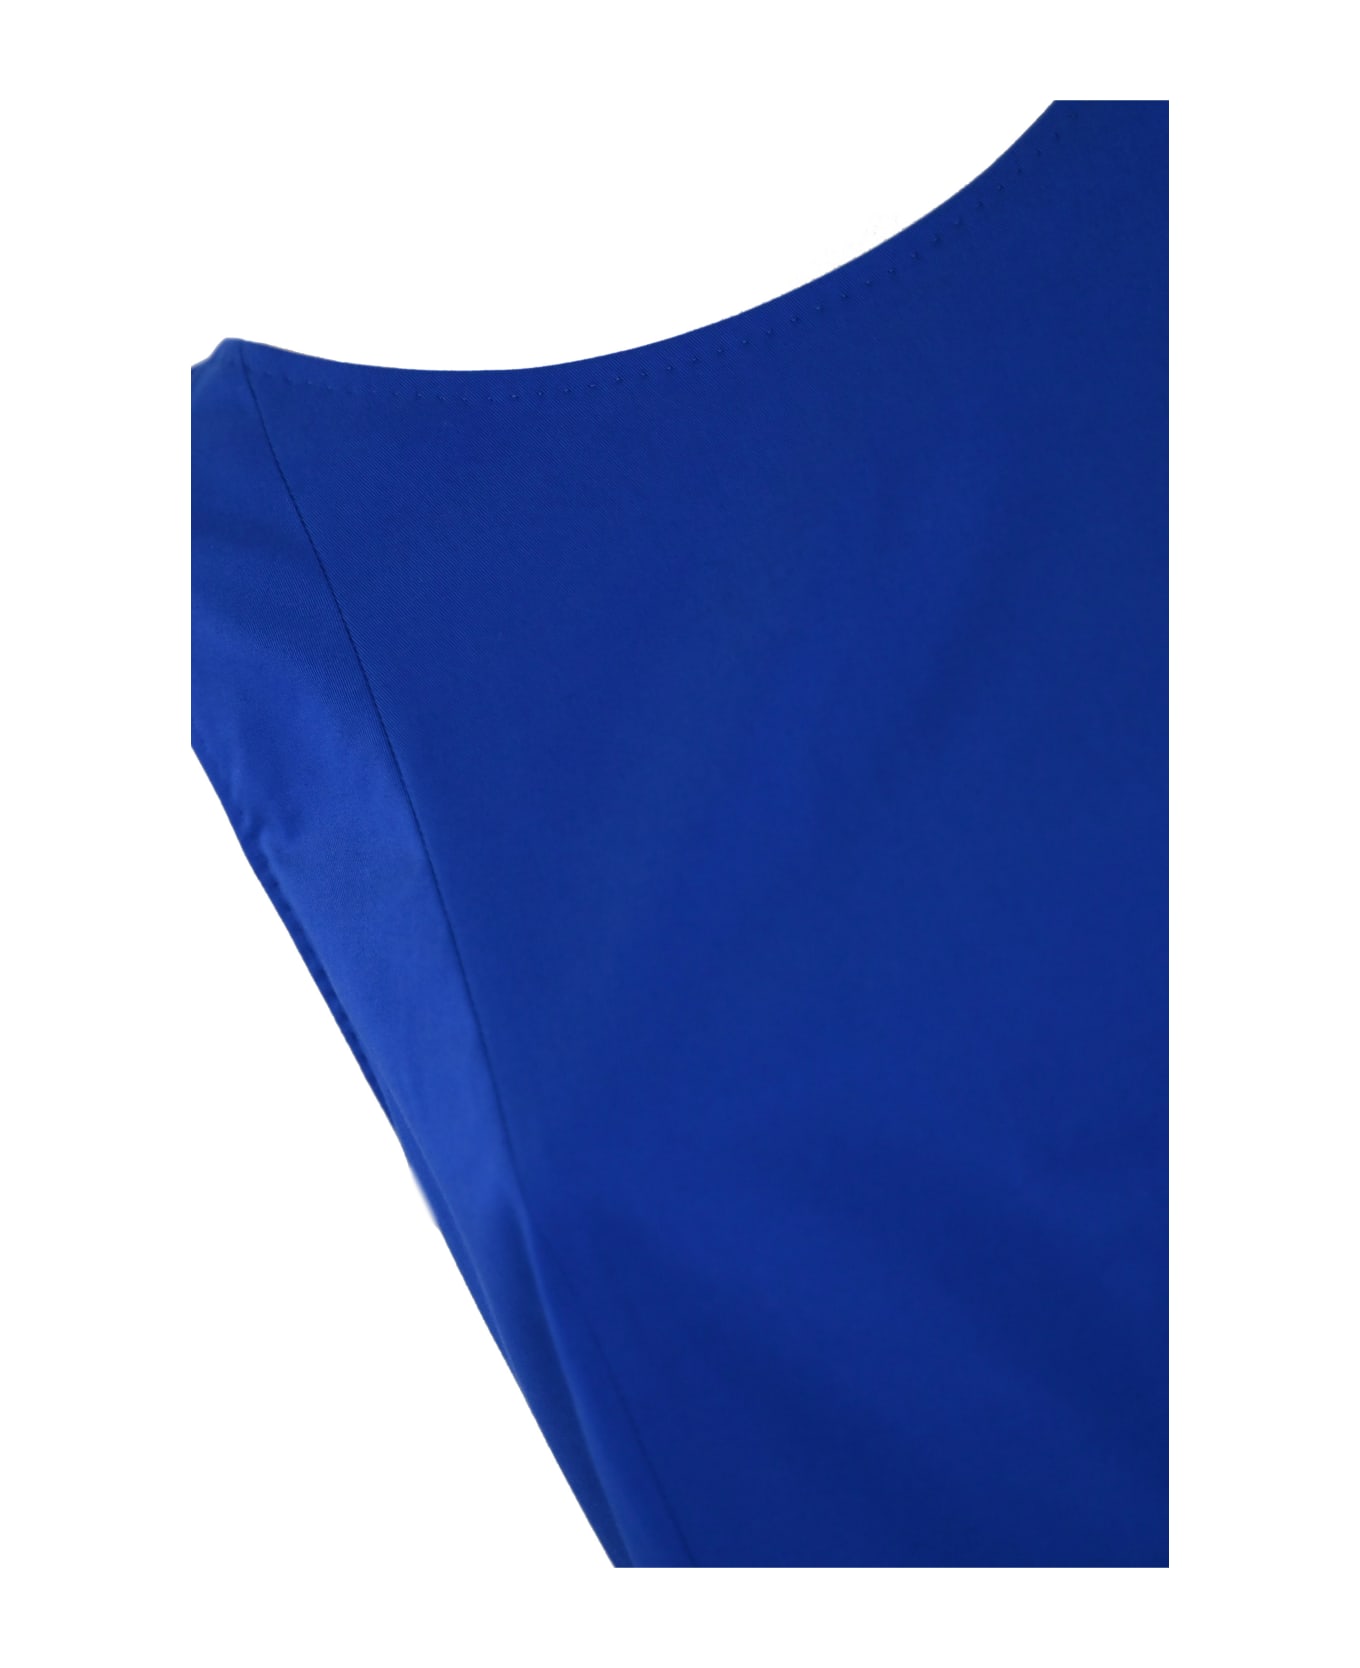 Max Mara Studio "leaf" Gabardine Dress - Bluette